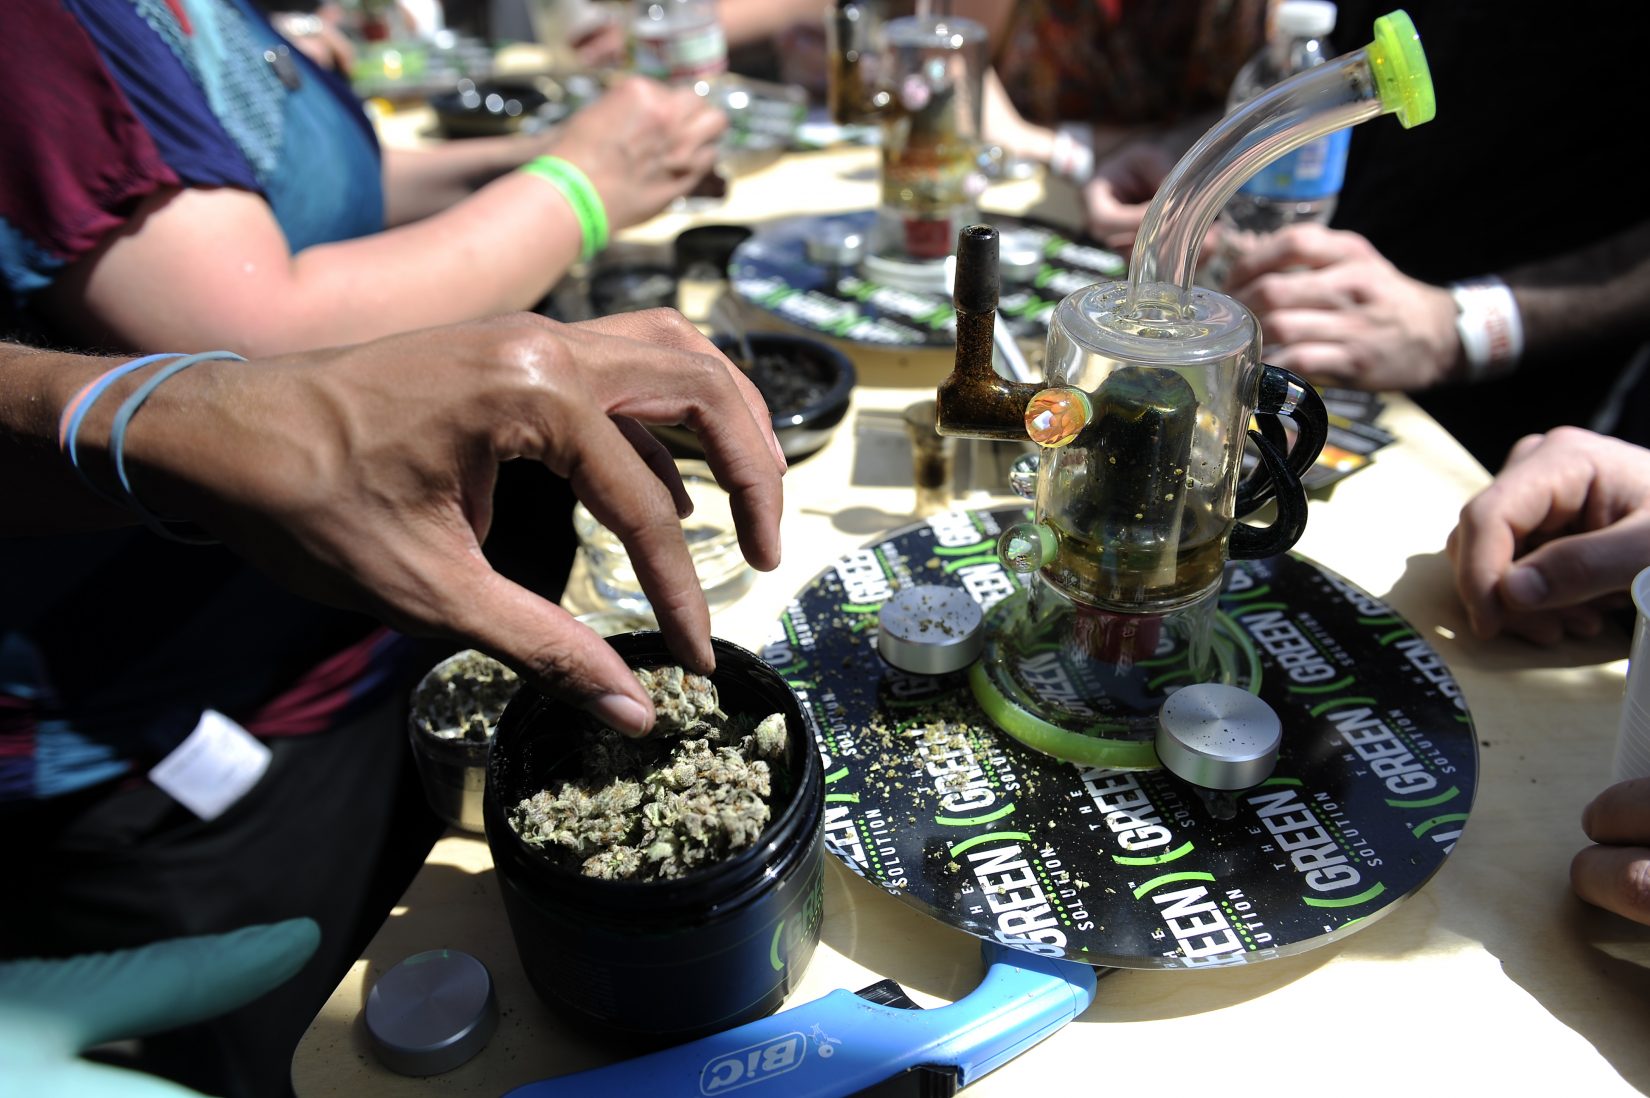 Cannabis Cup draws thousands to Denver 4/20 weed fair